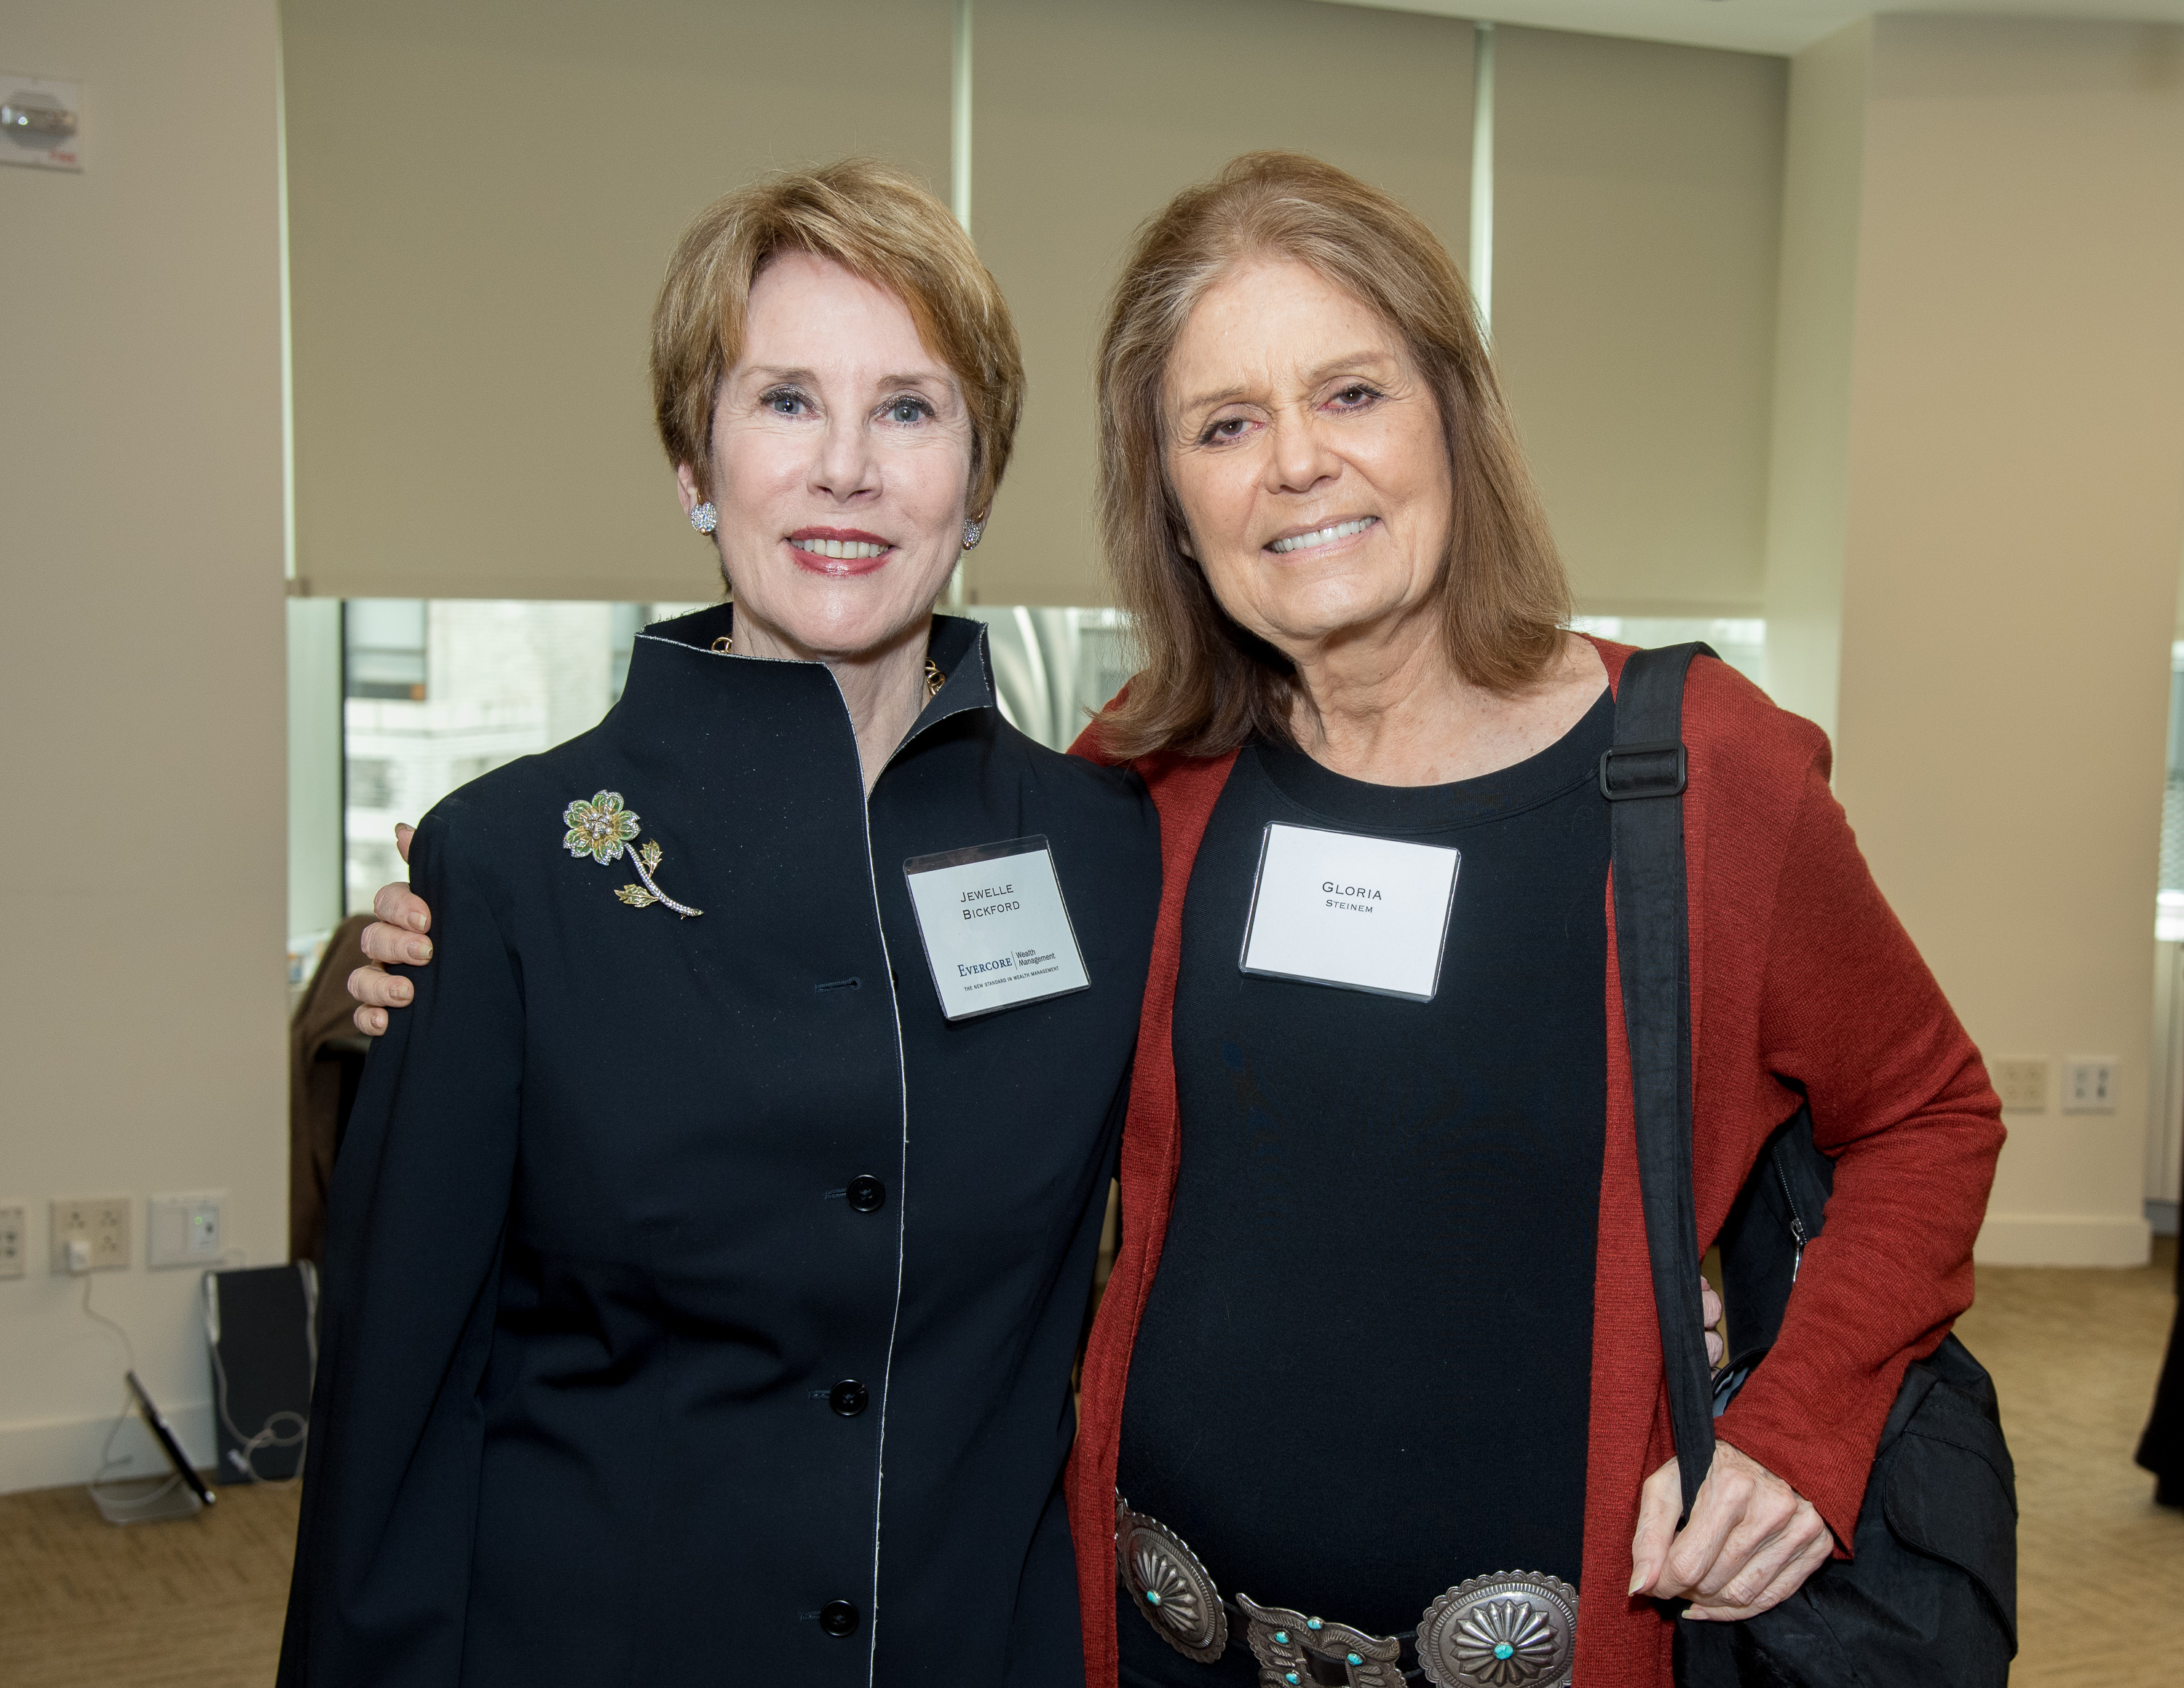 Jewelle Bickford and Gloria Steinem